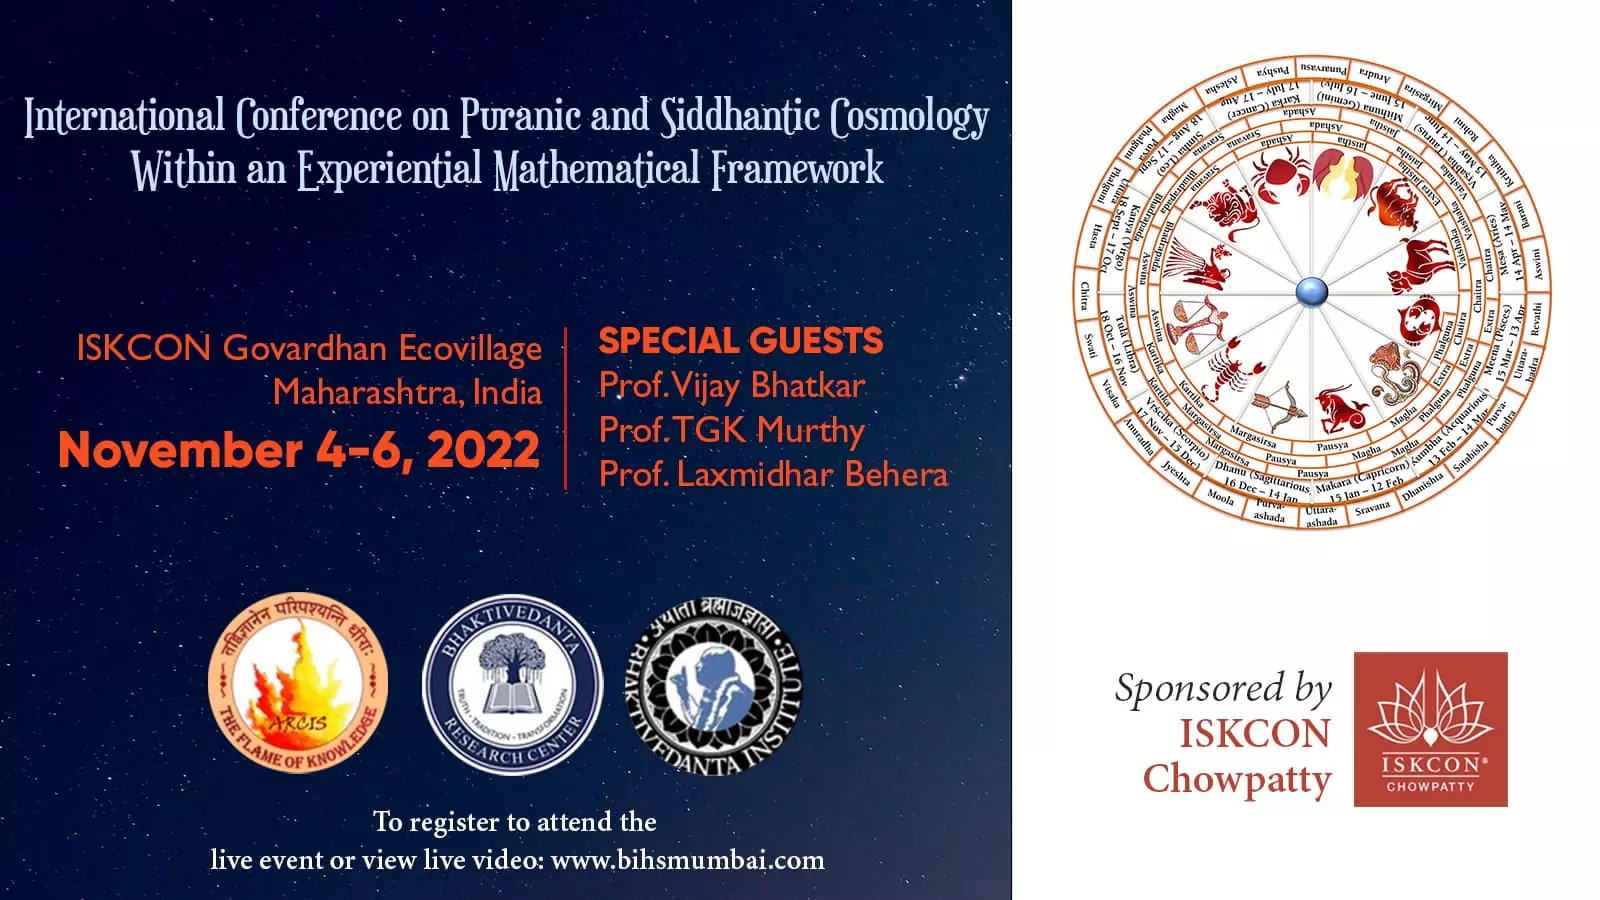 Puranic and Siddhantic Cosmology Conference, Govardhan Ecovillage, November 4-6, 2022